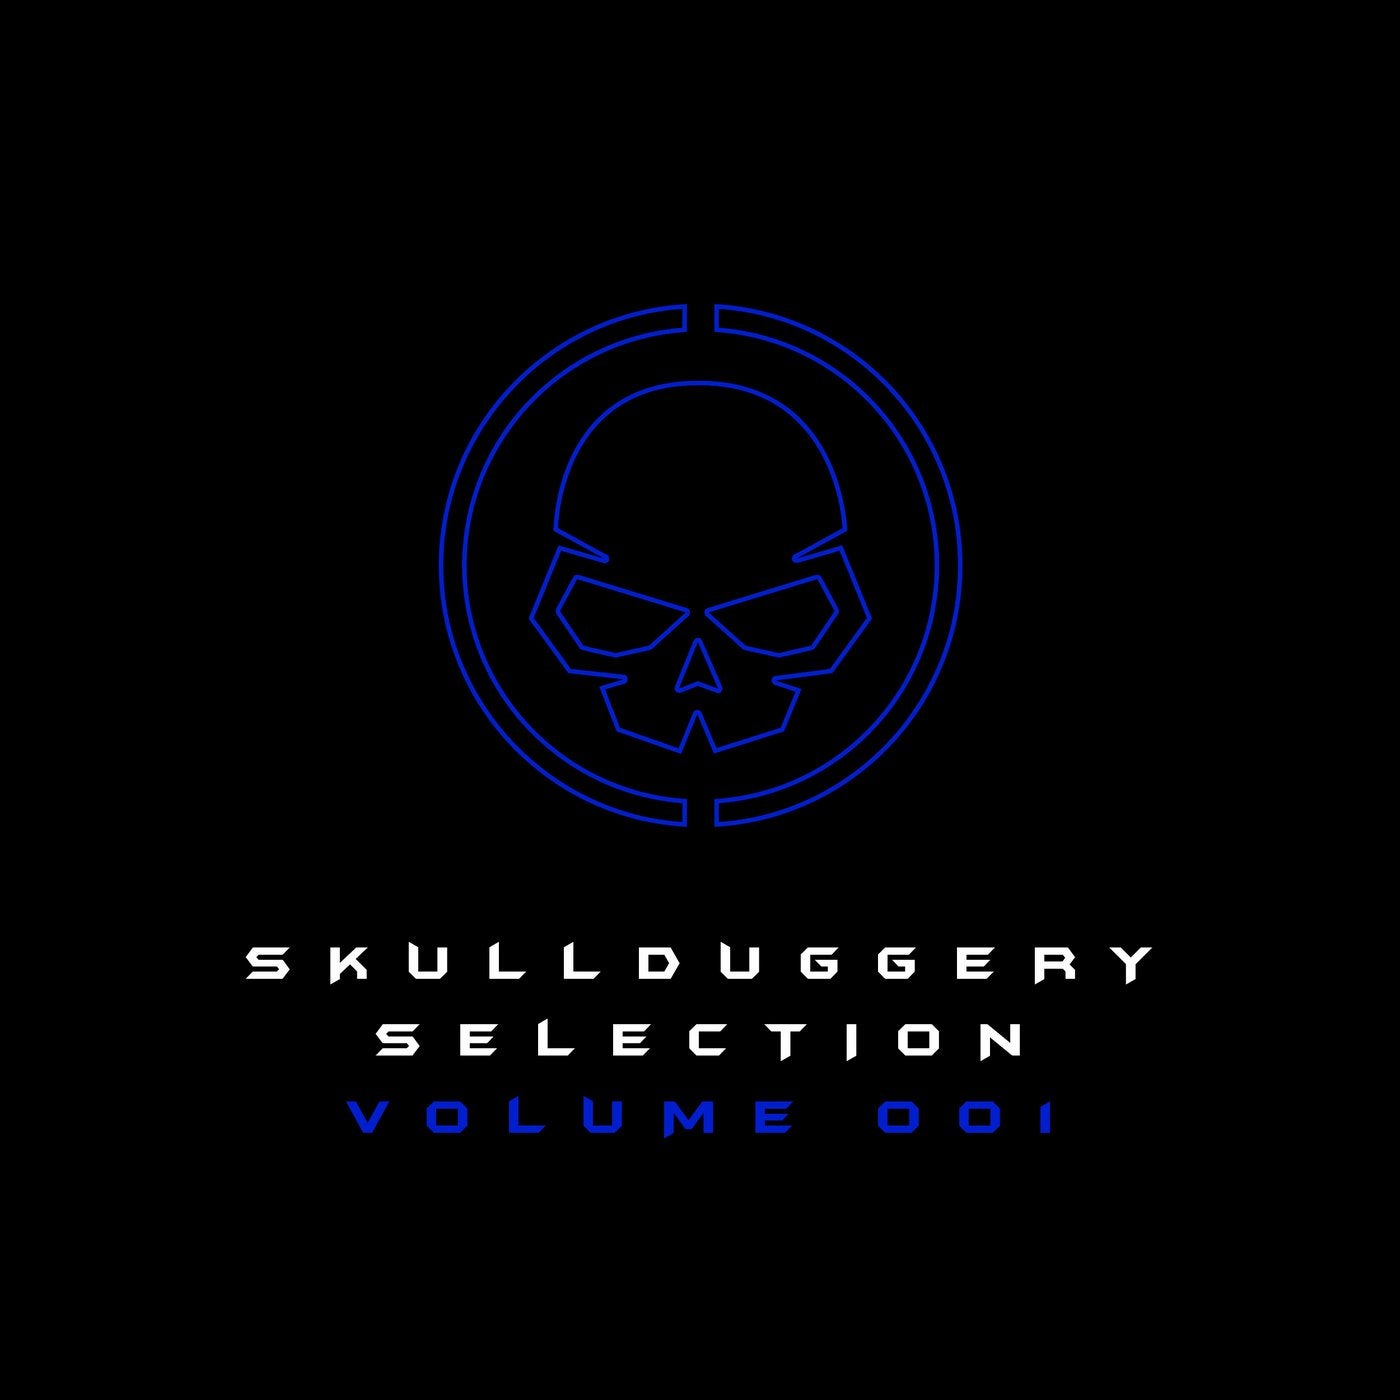 Skullduggery Selection Volume 001